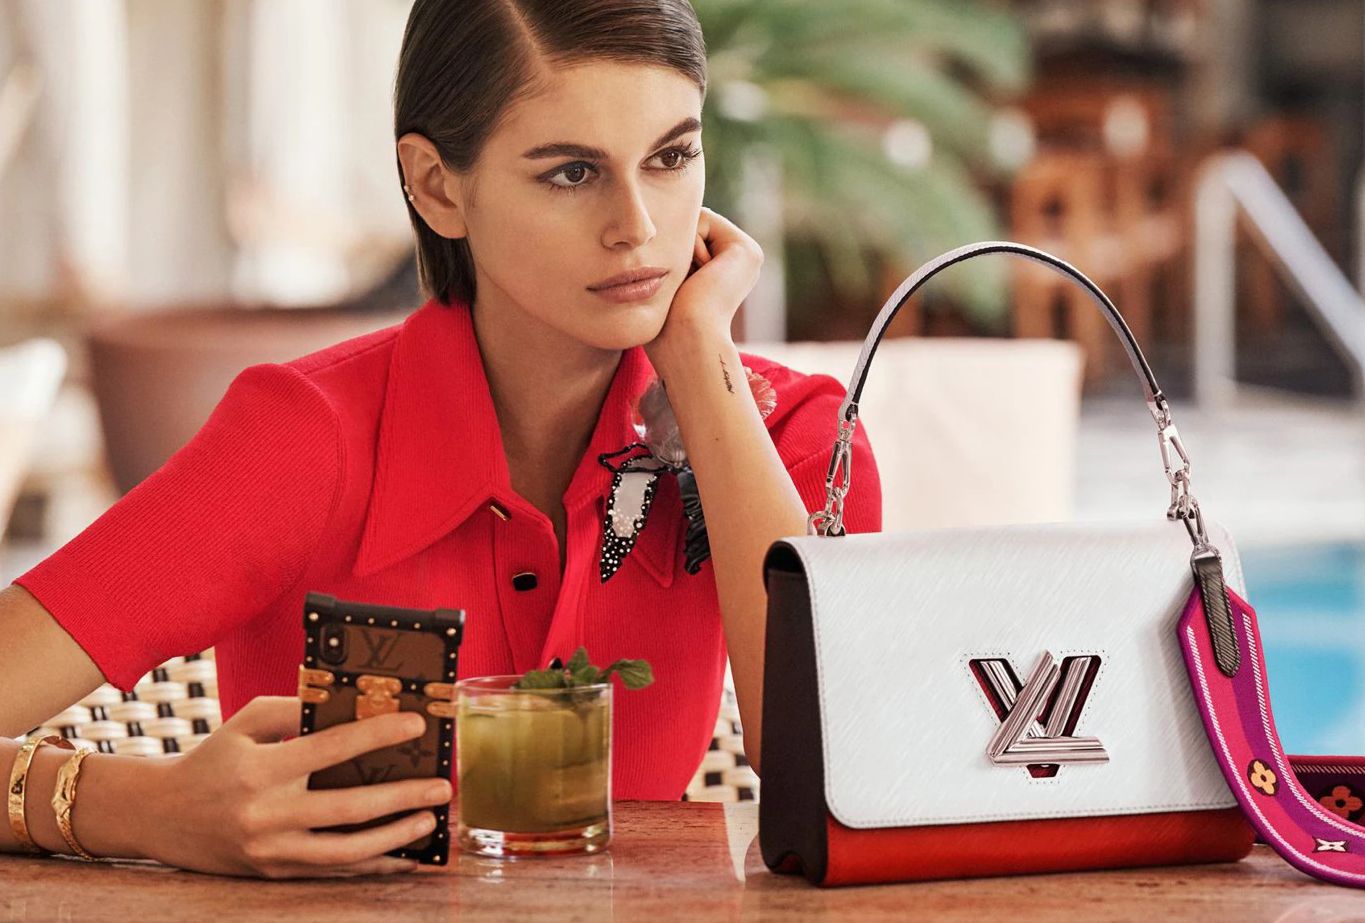 Louis Vuitton Moët Hennessy (LVMH) recorded revenue